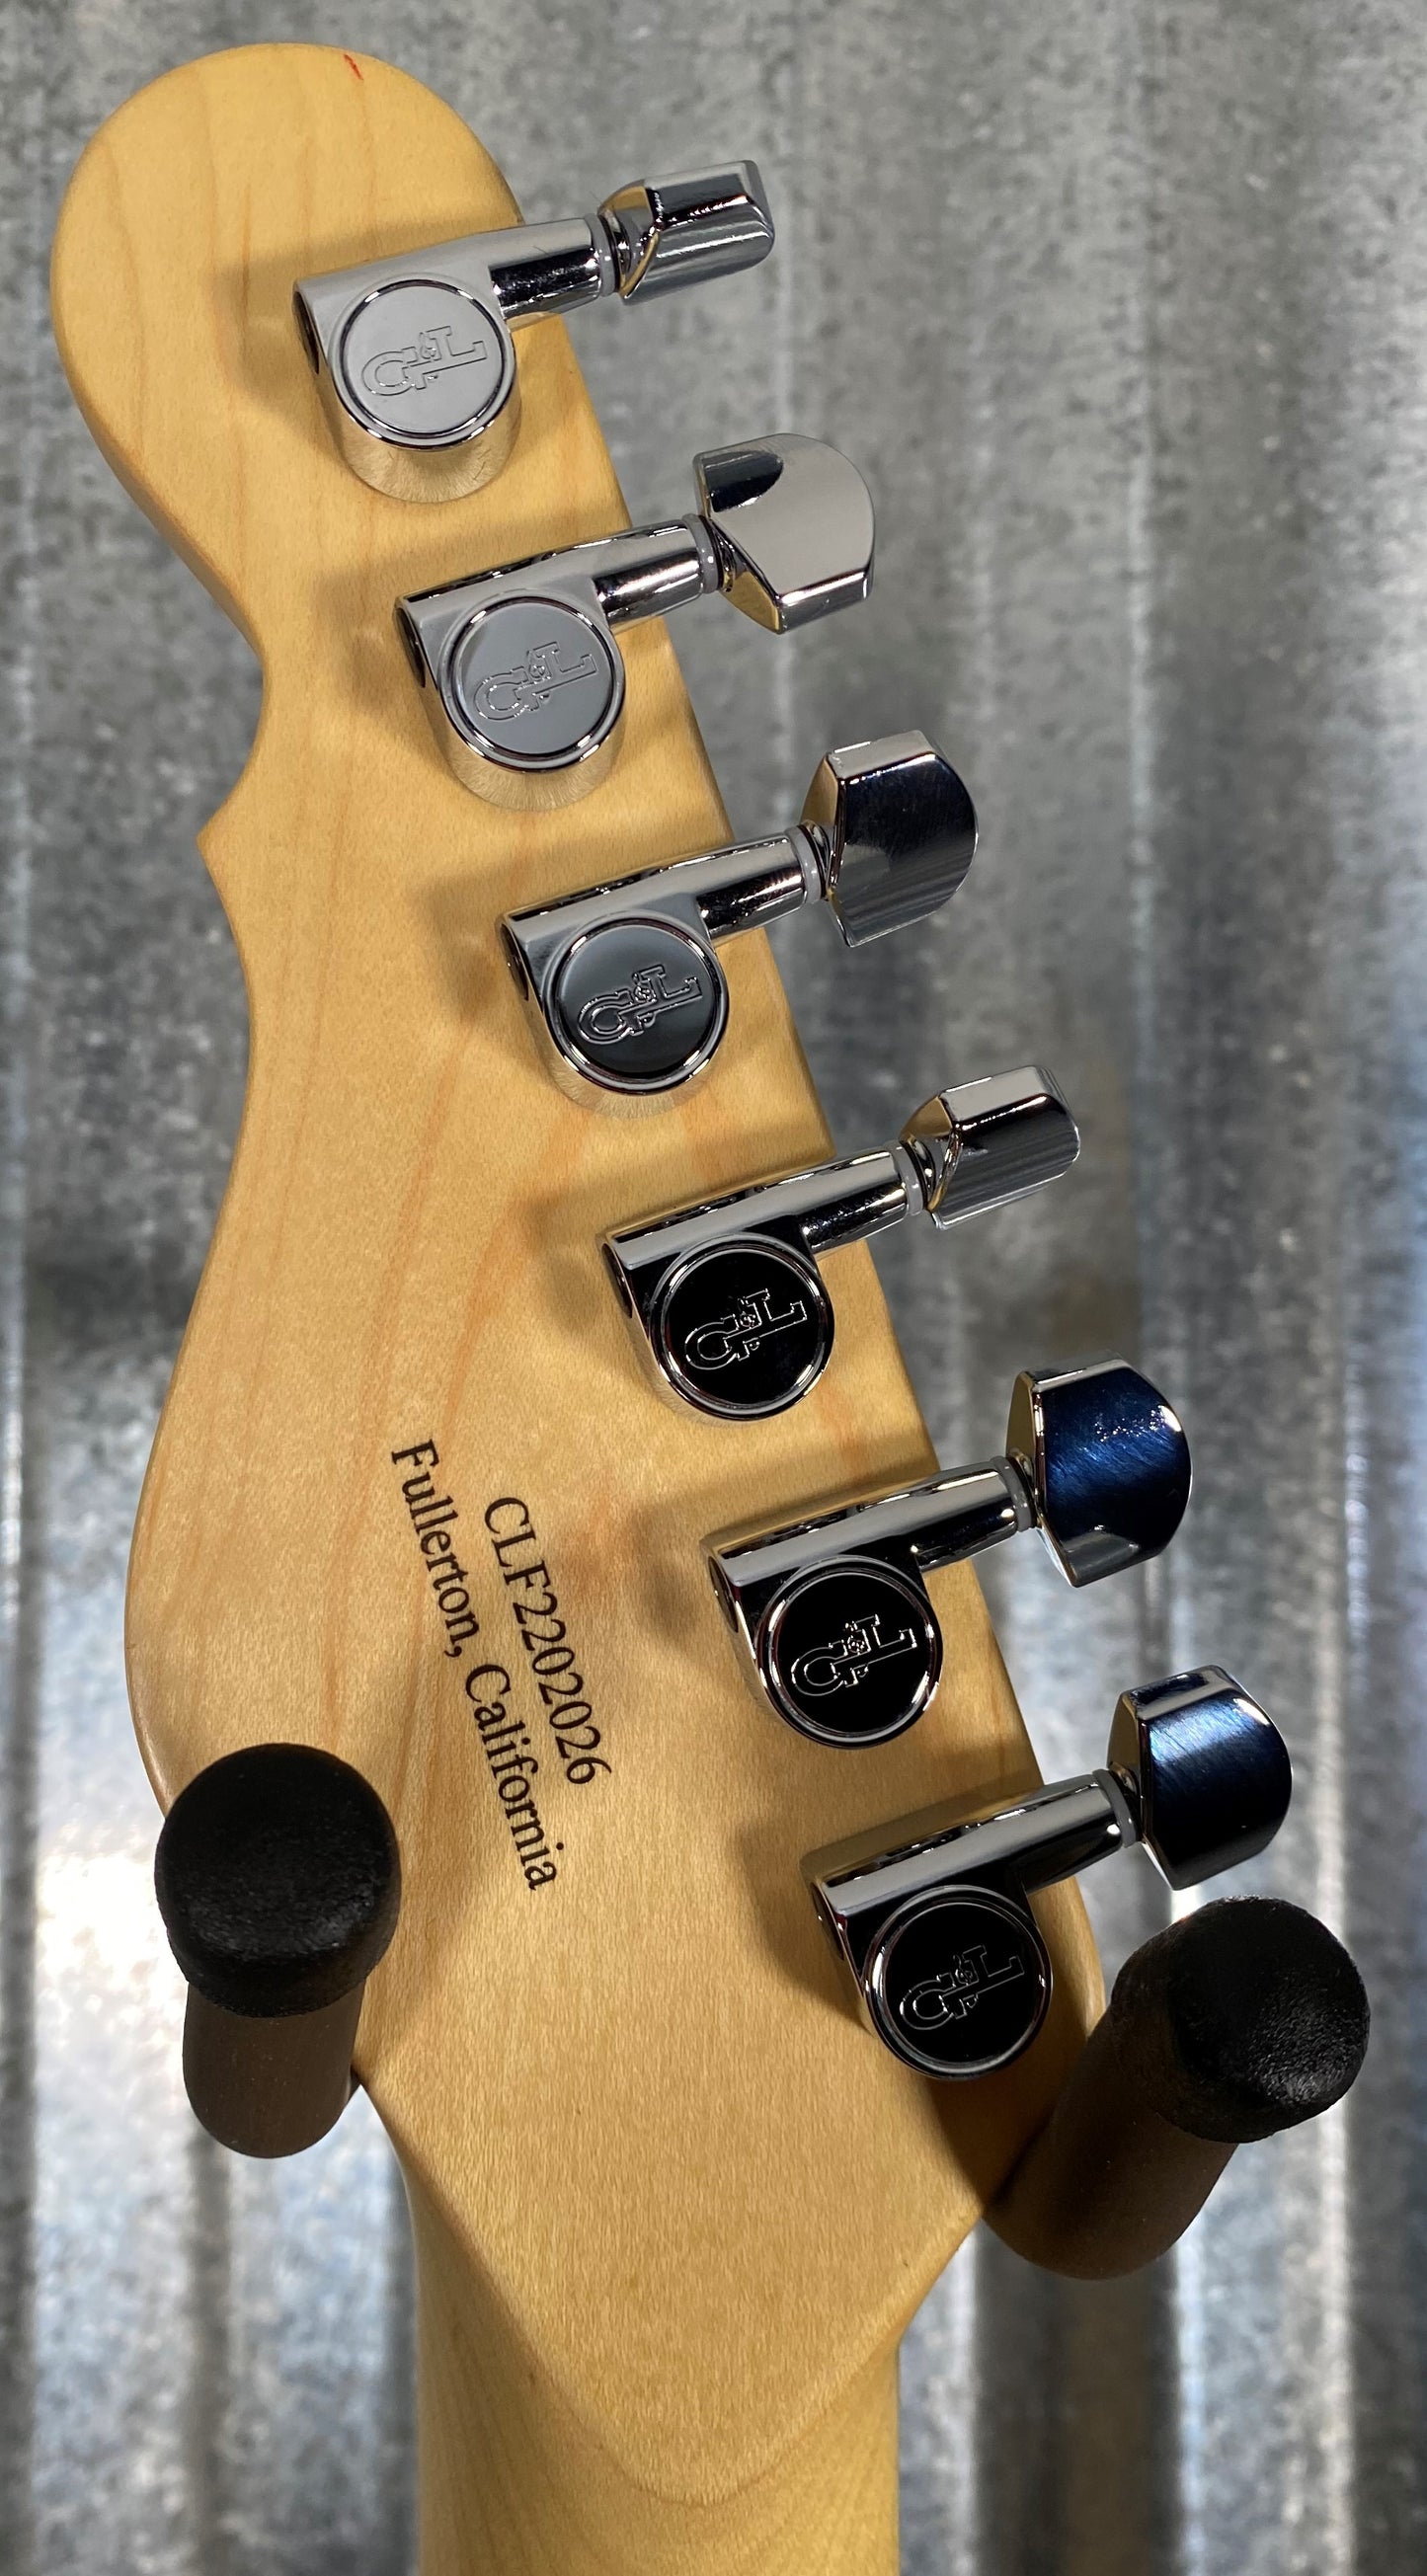 G&L USA  ASAT Classic Butterscotch Blonde Pine Maple Satin Neck Guitar & Case #2026